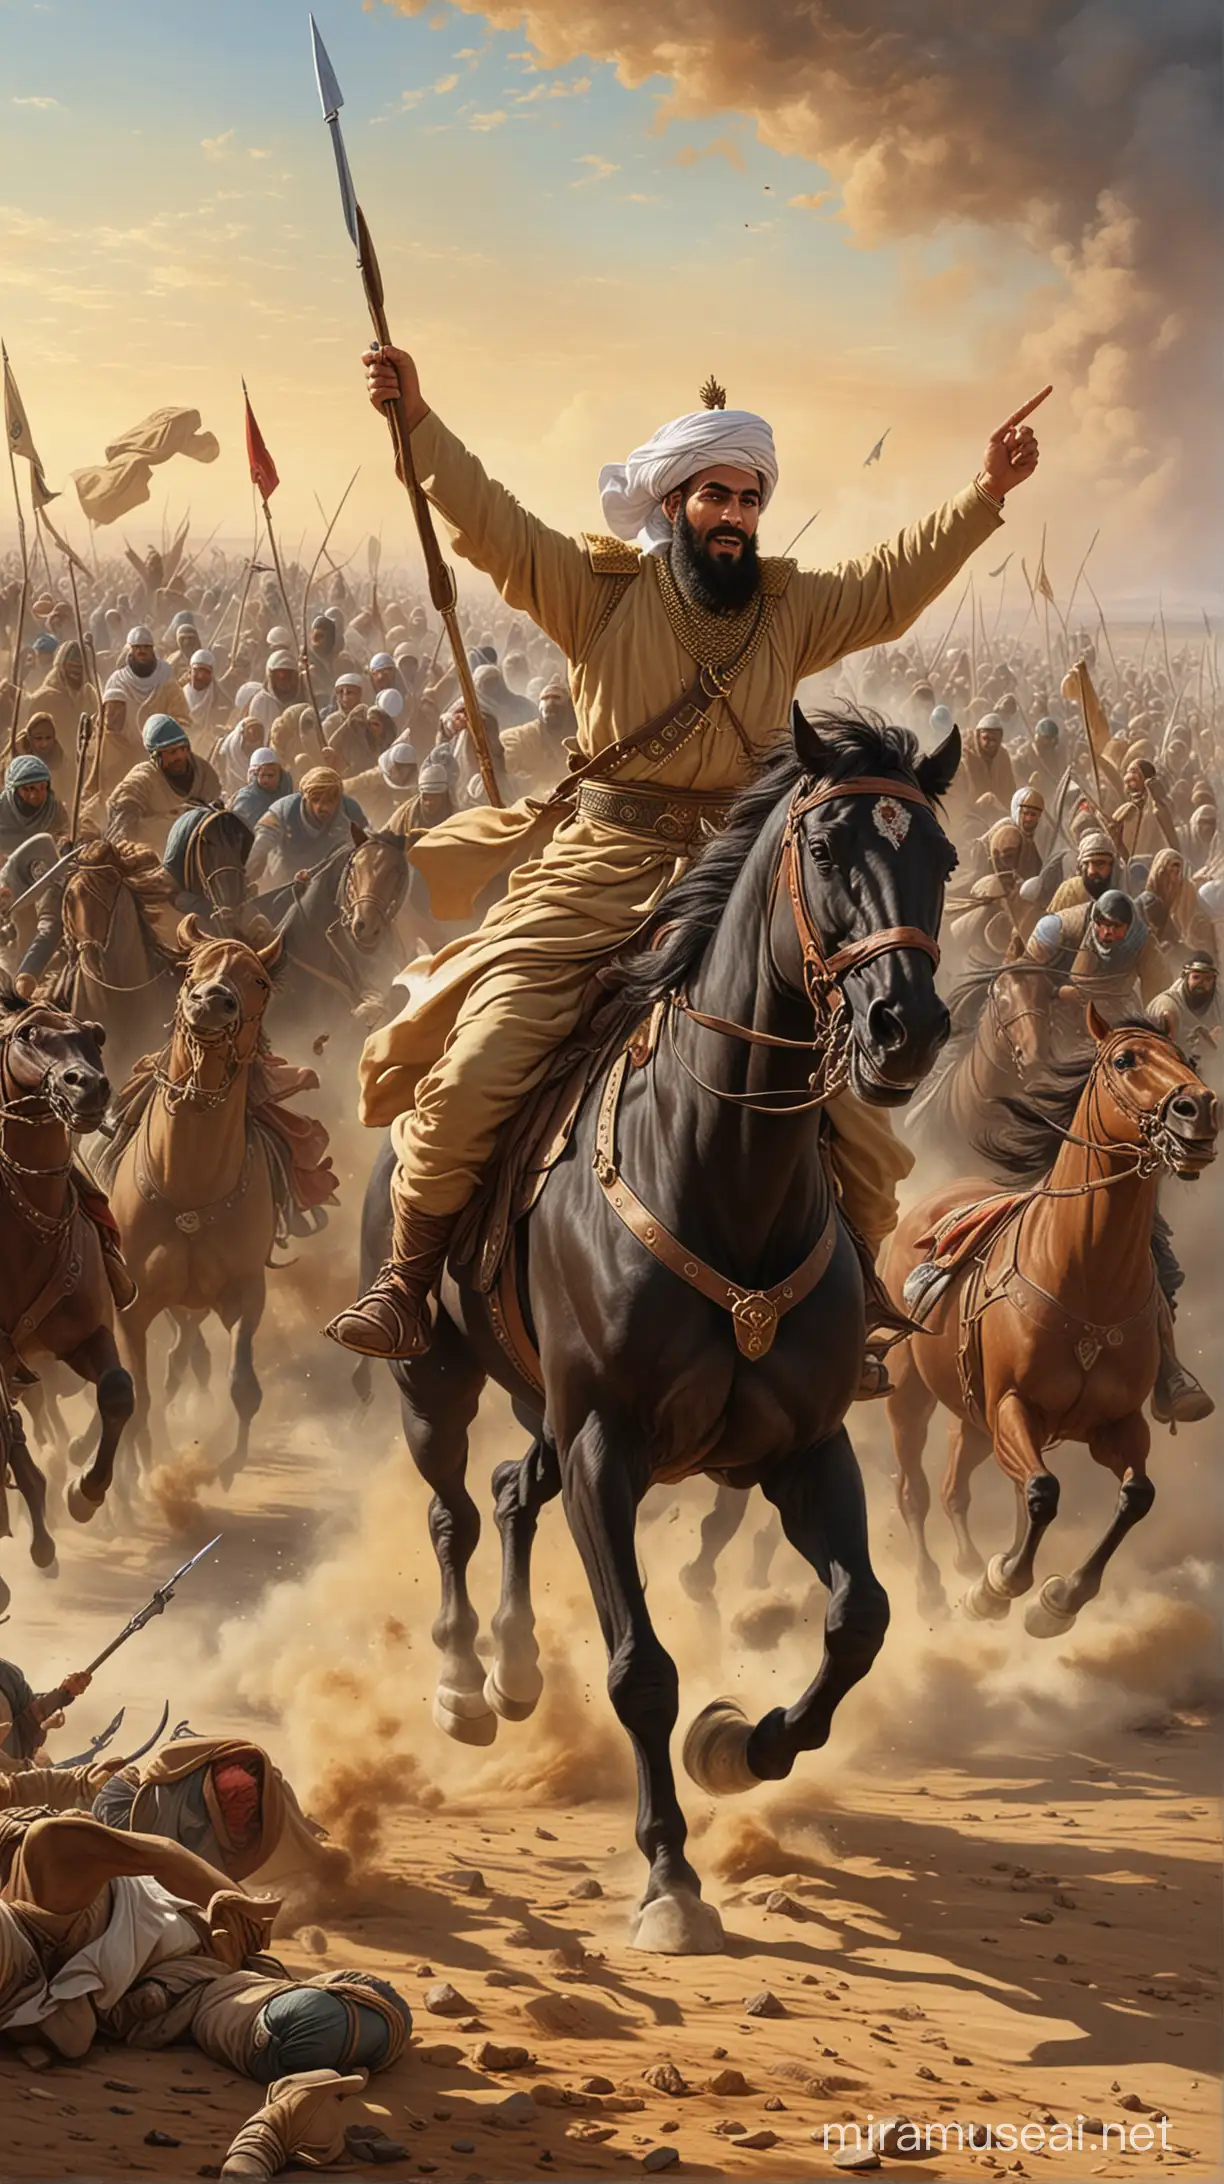 A painting depicting Selahaddin Eyyubi's triumph on the battlefield.
